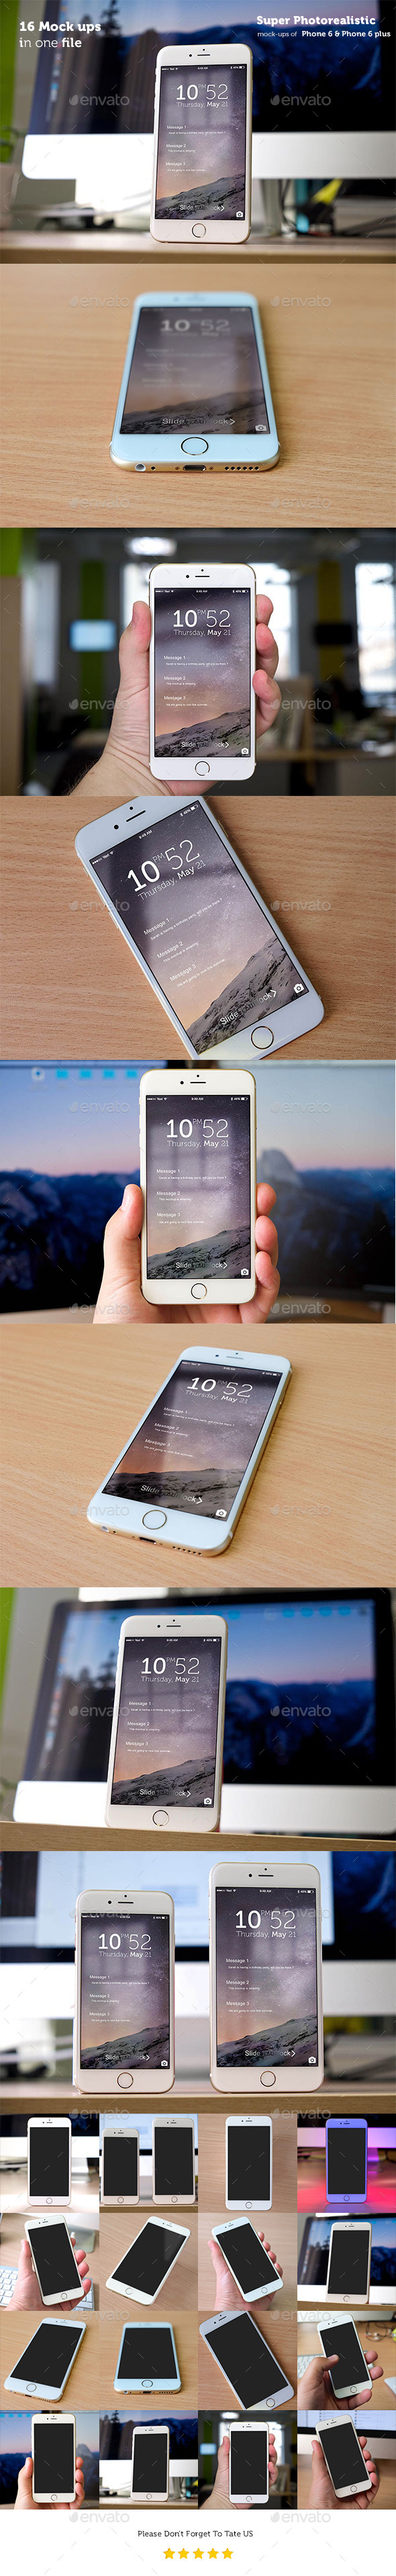 Phone 6 and Phone 6 Plus Photorealistic Mockups